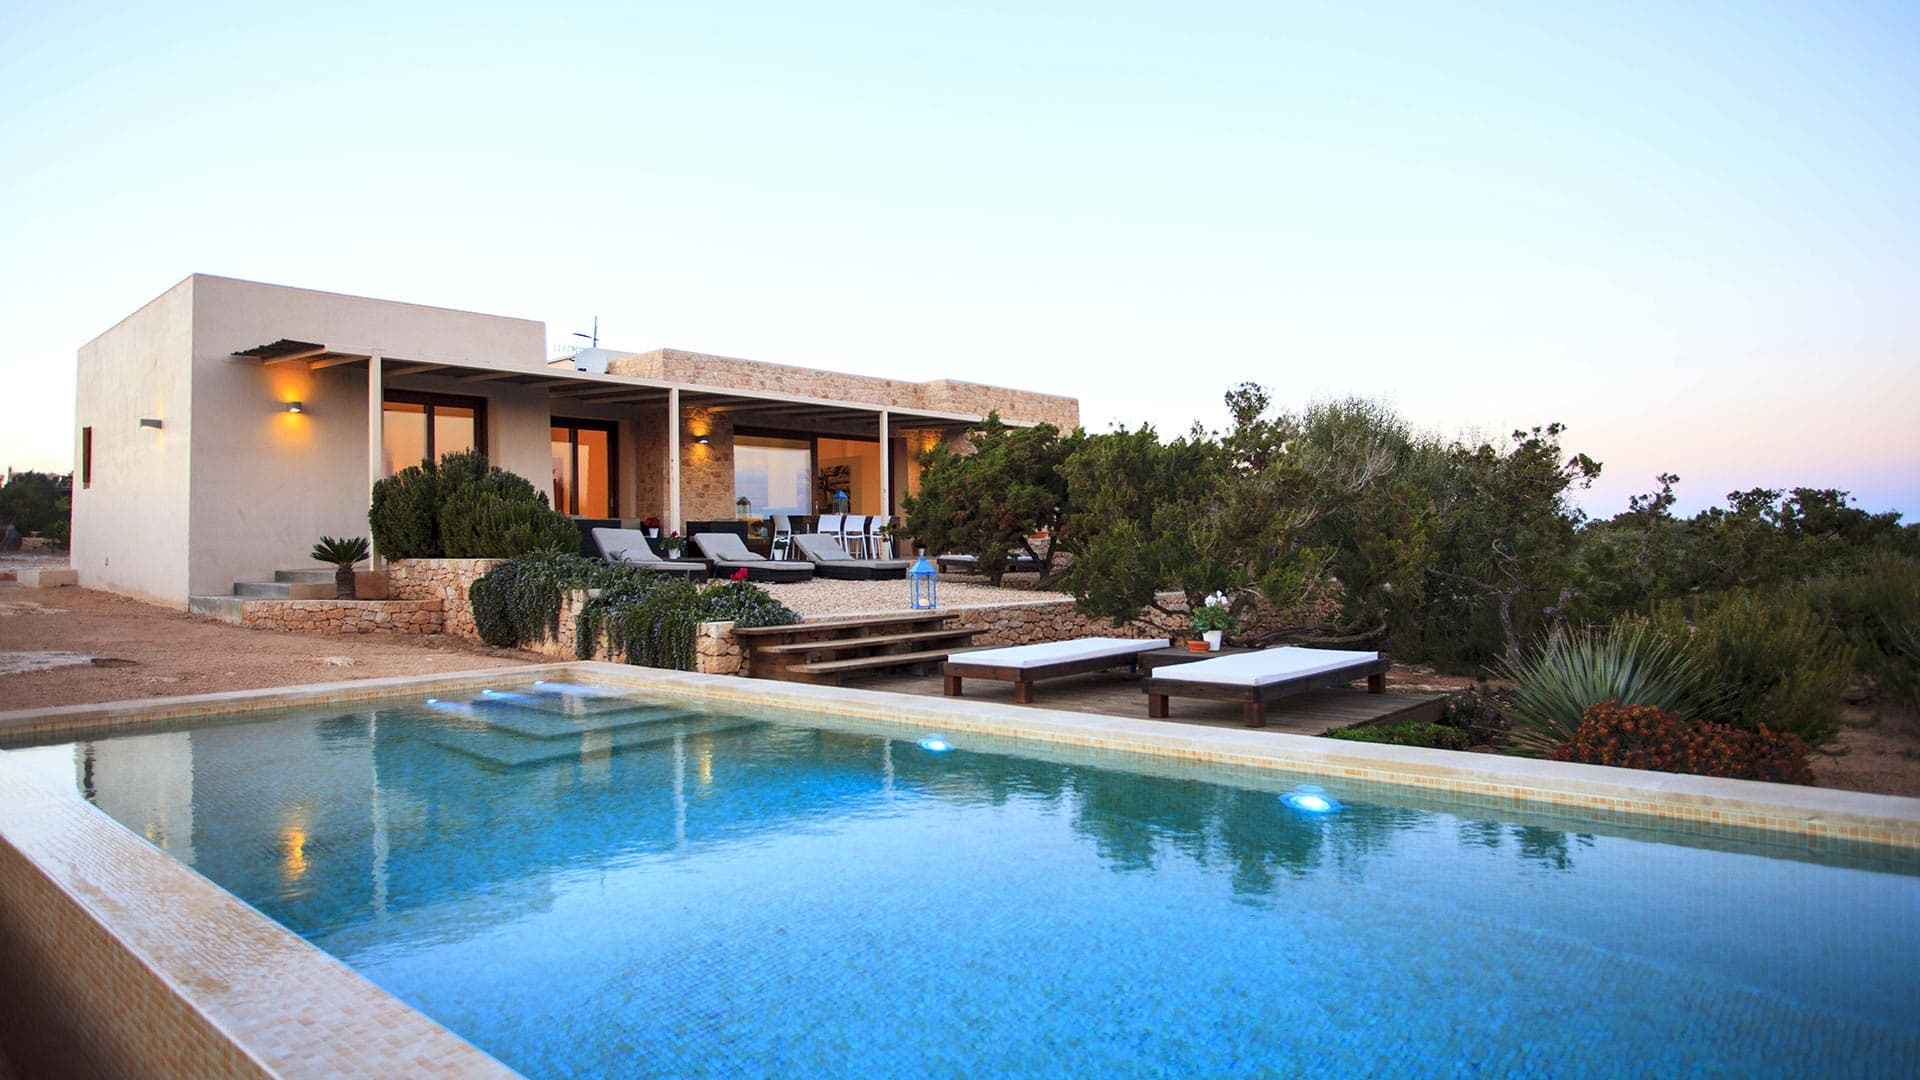 Villa jewelia, Formentera photos, Exclusive vacation, Luxurious accommodations, 1920x1080 Full HD Desktop